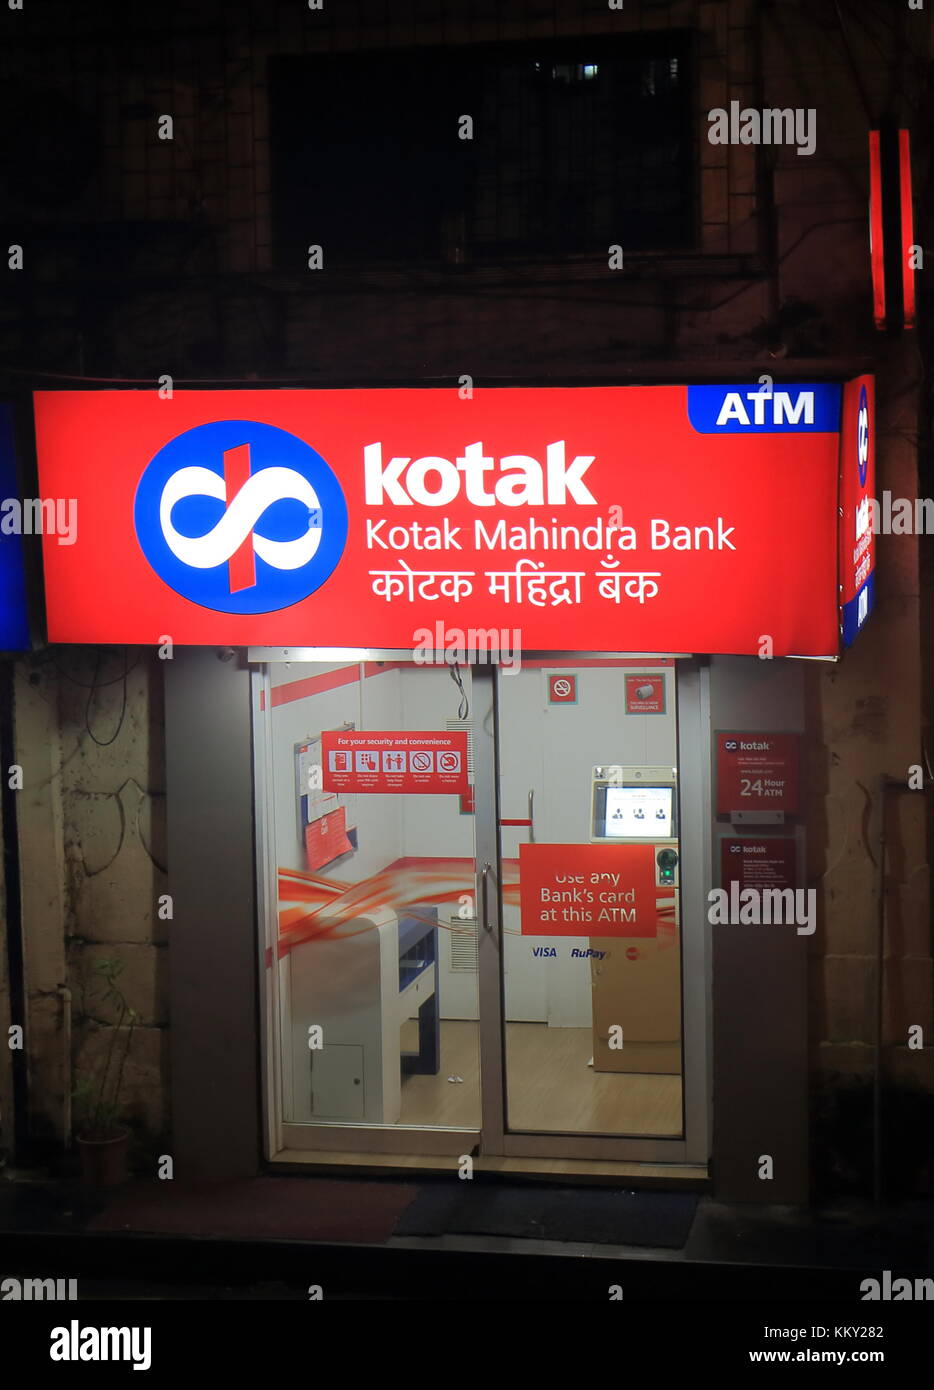 Kotak Mahindra Bank ATM nel centro cittadino di Mumbai in India. Kotak Mahindra Bank è un privato indiano Bank con sede a Mumbai in India. Foto Stock